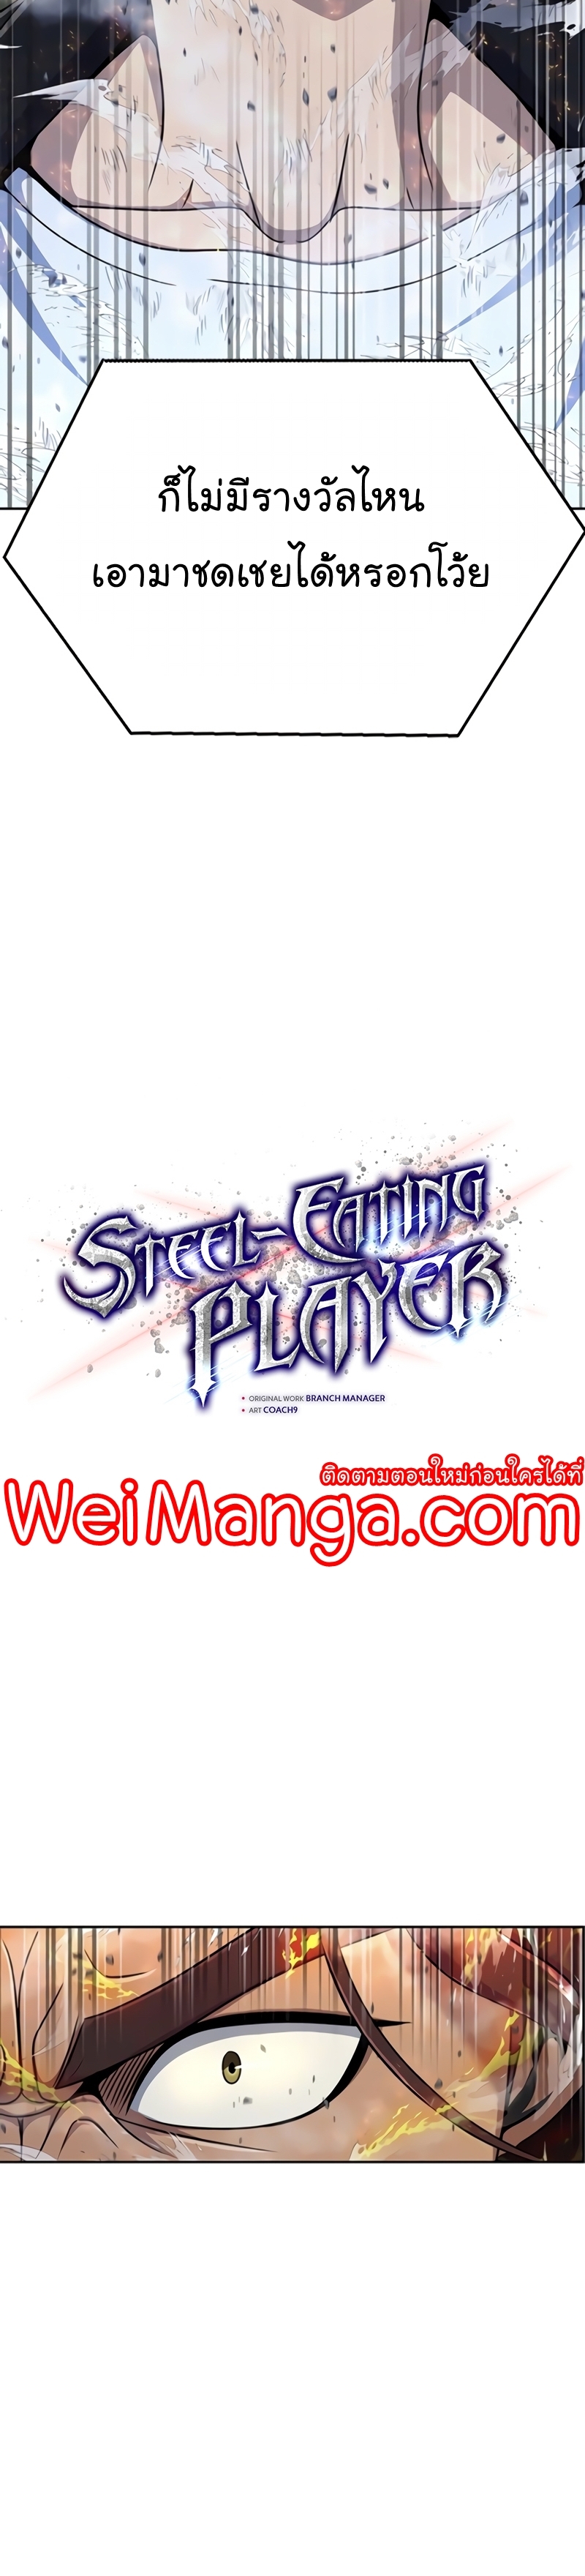 Steel Eating Player Wei Manga Manhwa 24 (8)